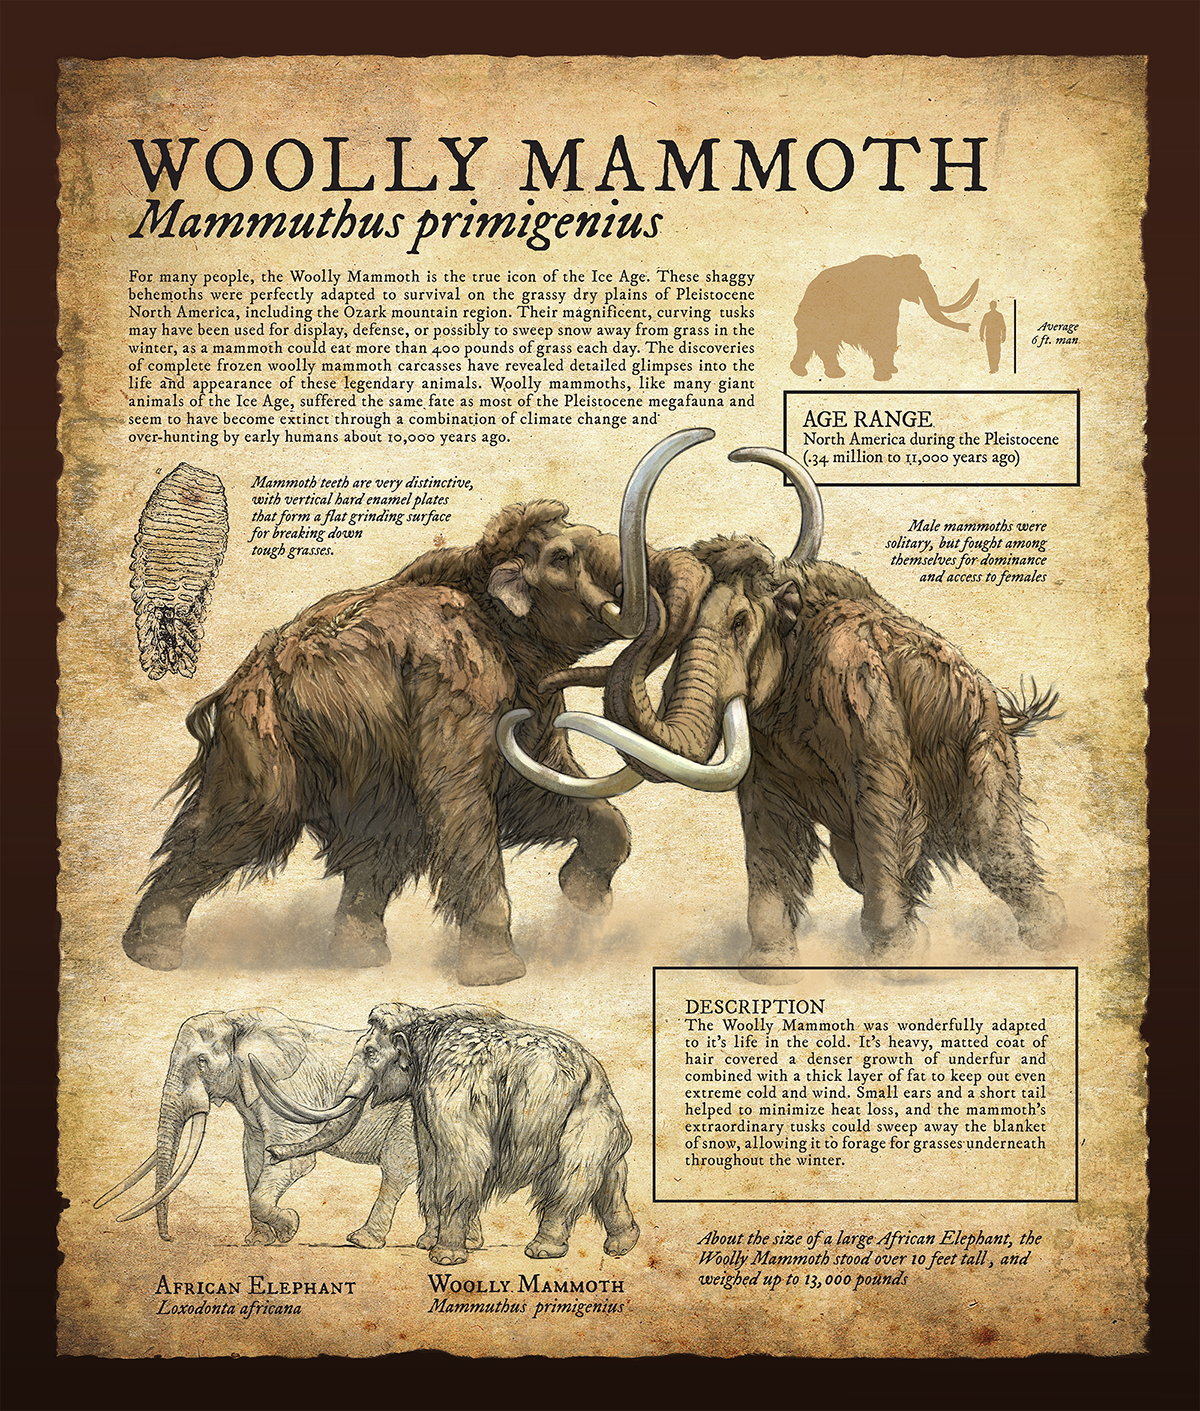 natural history museum prehistoric animals wildlife paleoart informative educational woolly mammoth lion bear Arctodus